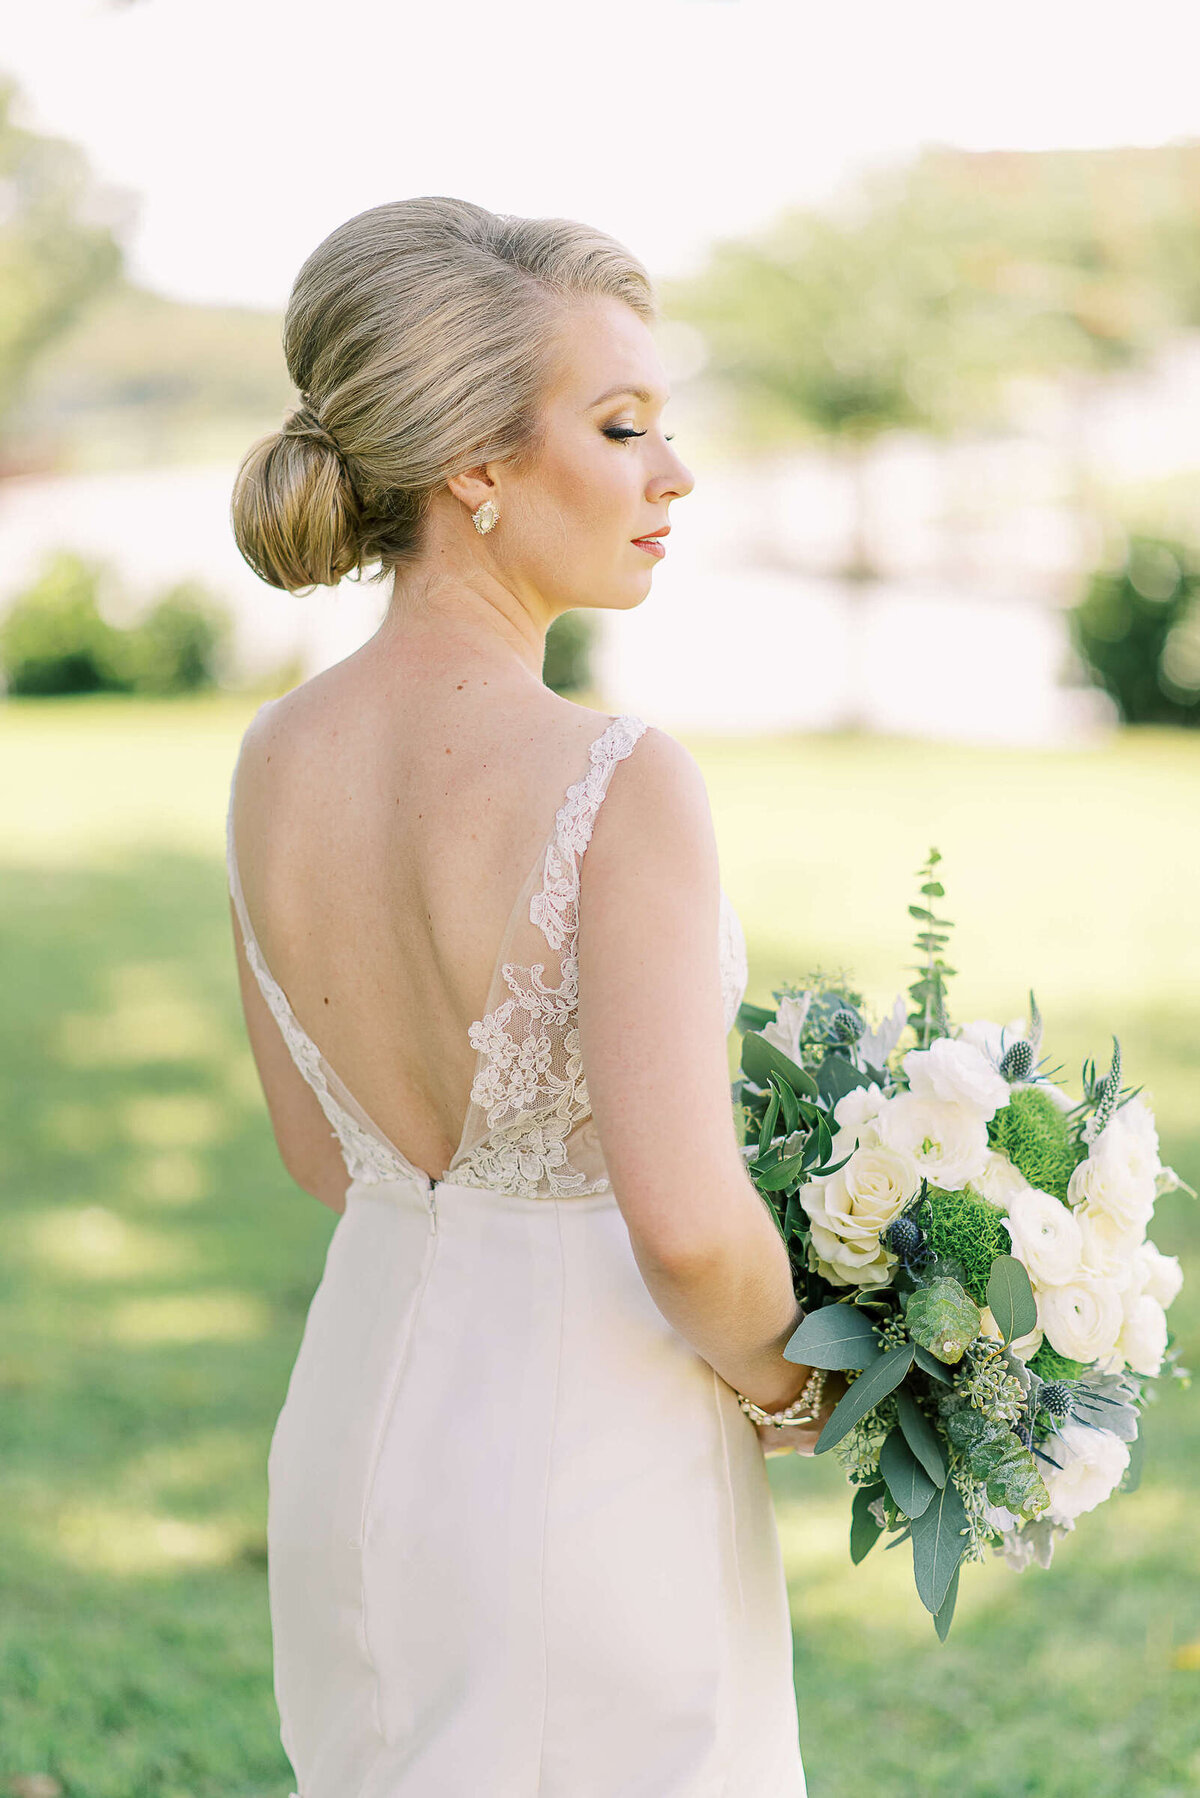 Elegant bride with blonde updo wearing backless dress